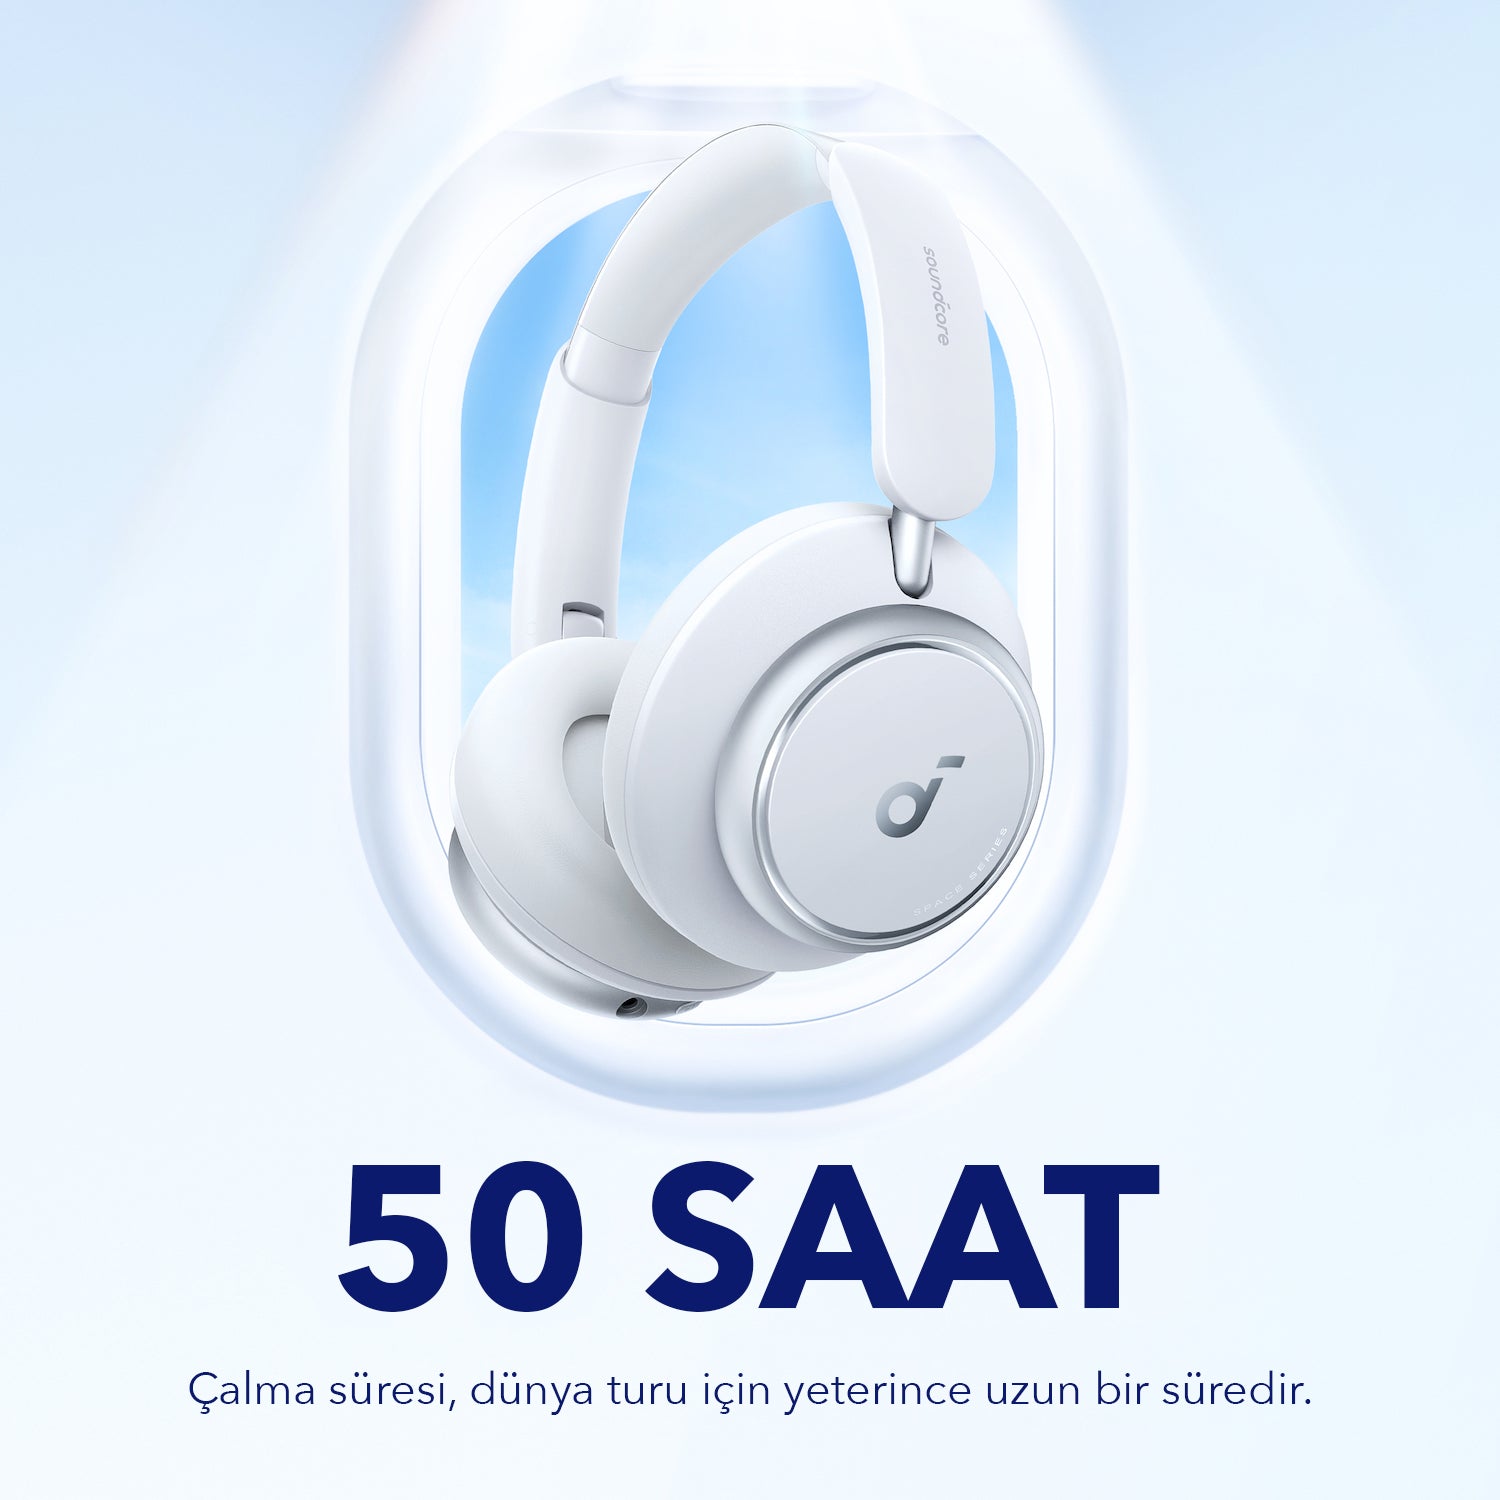 Anker Soundcore Space Q45 Bluetooth Headphones - White